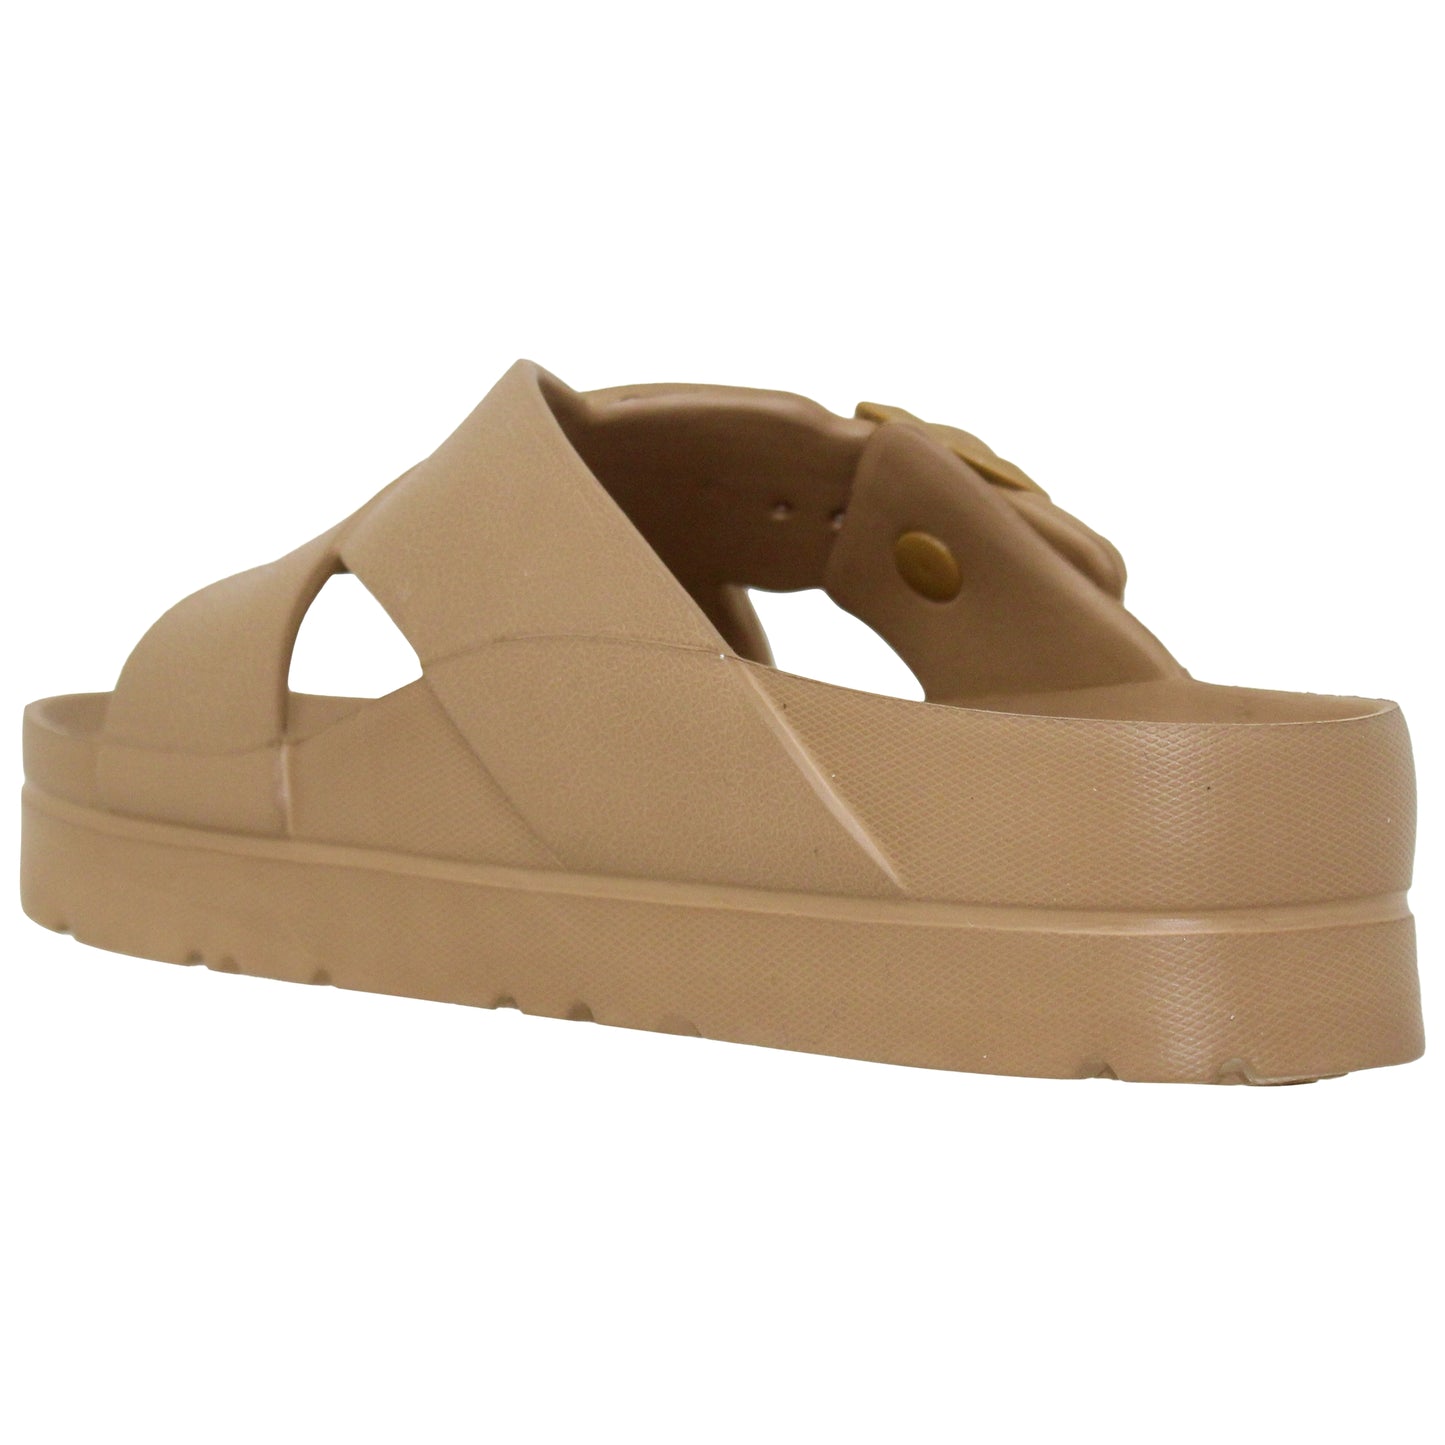 SOBEYO Light-Weight  Platform Sandals Criss-Cross Adjustable Buckles Tan